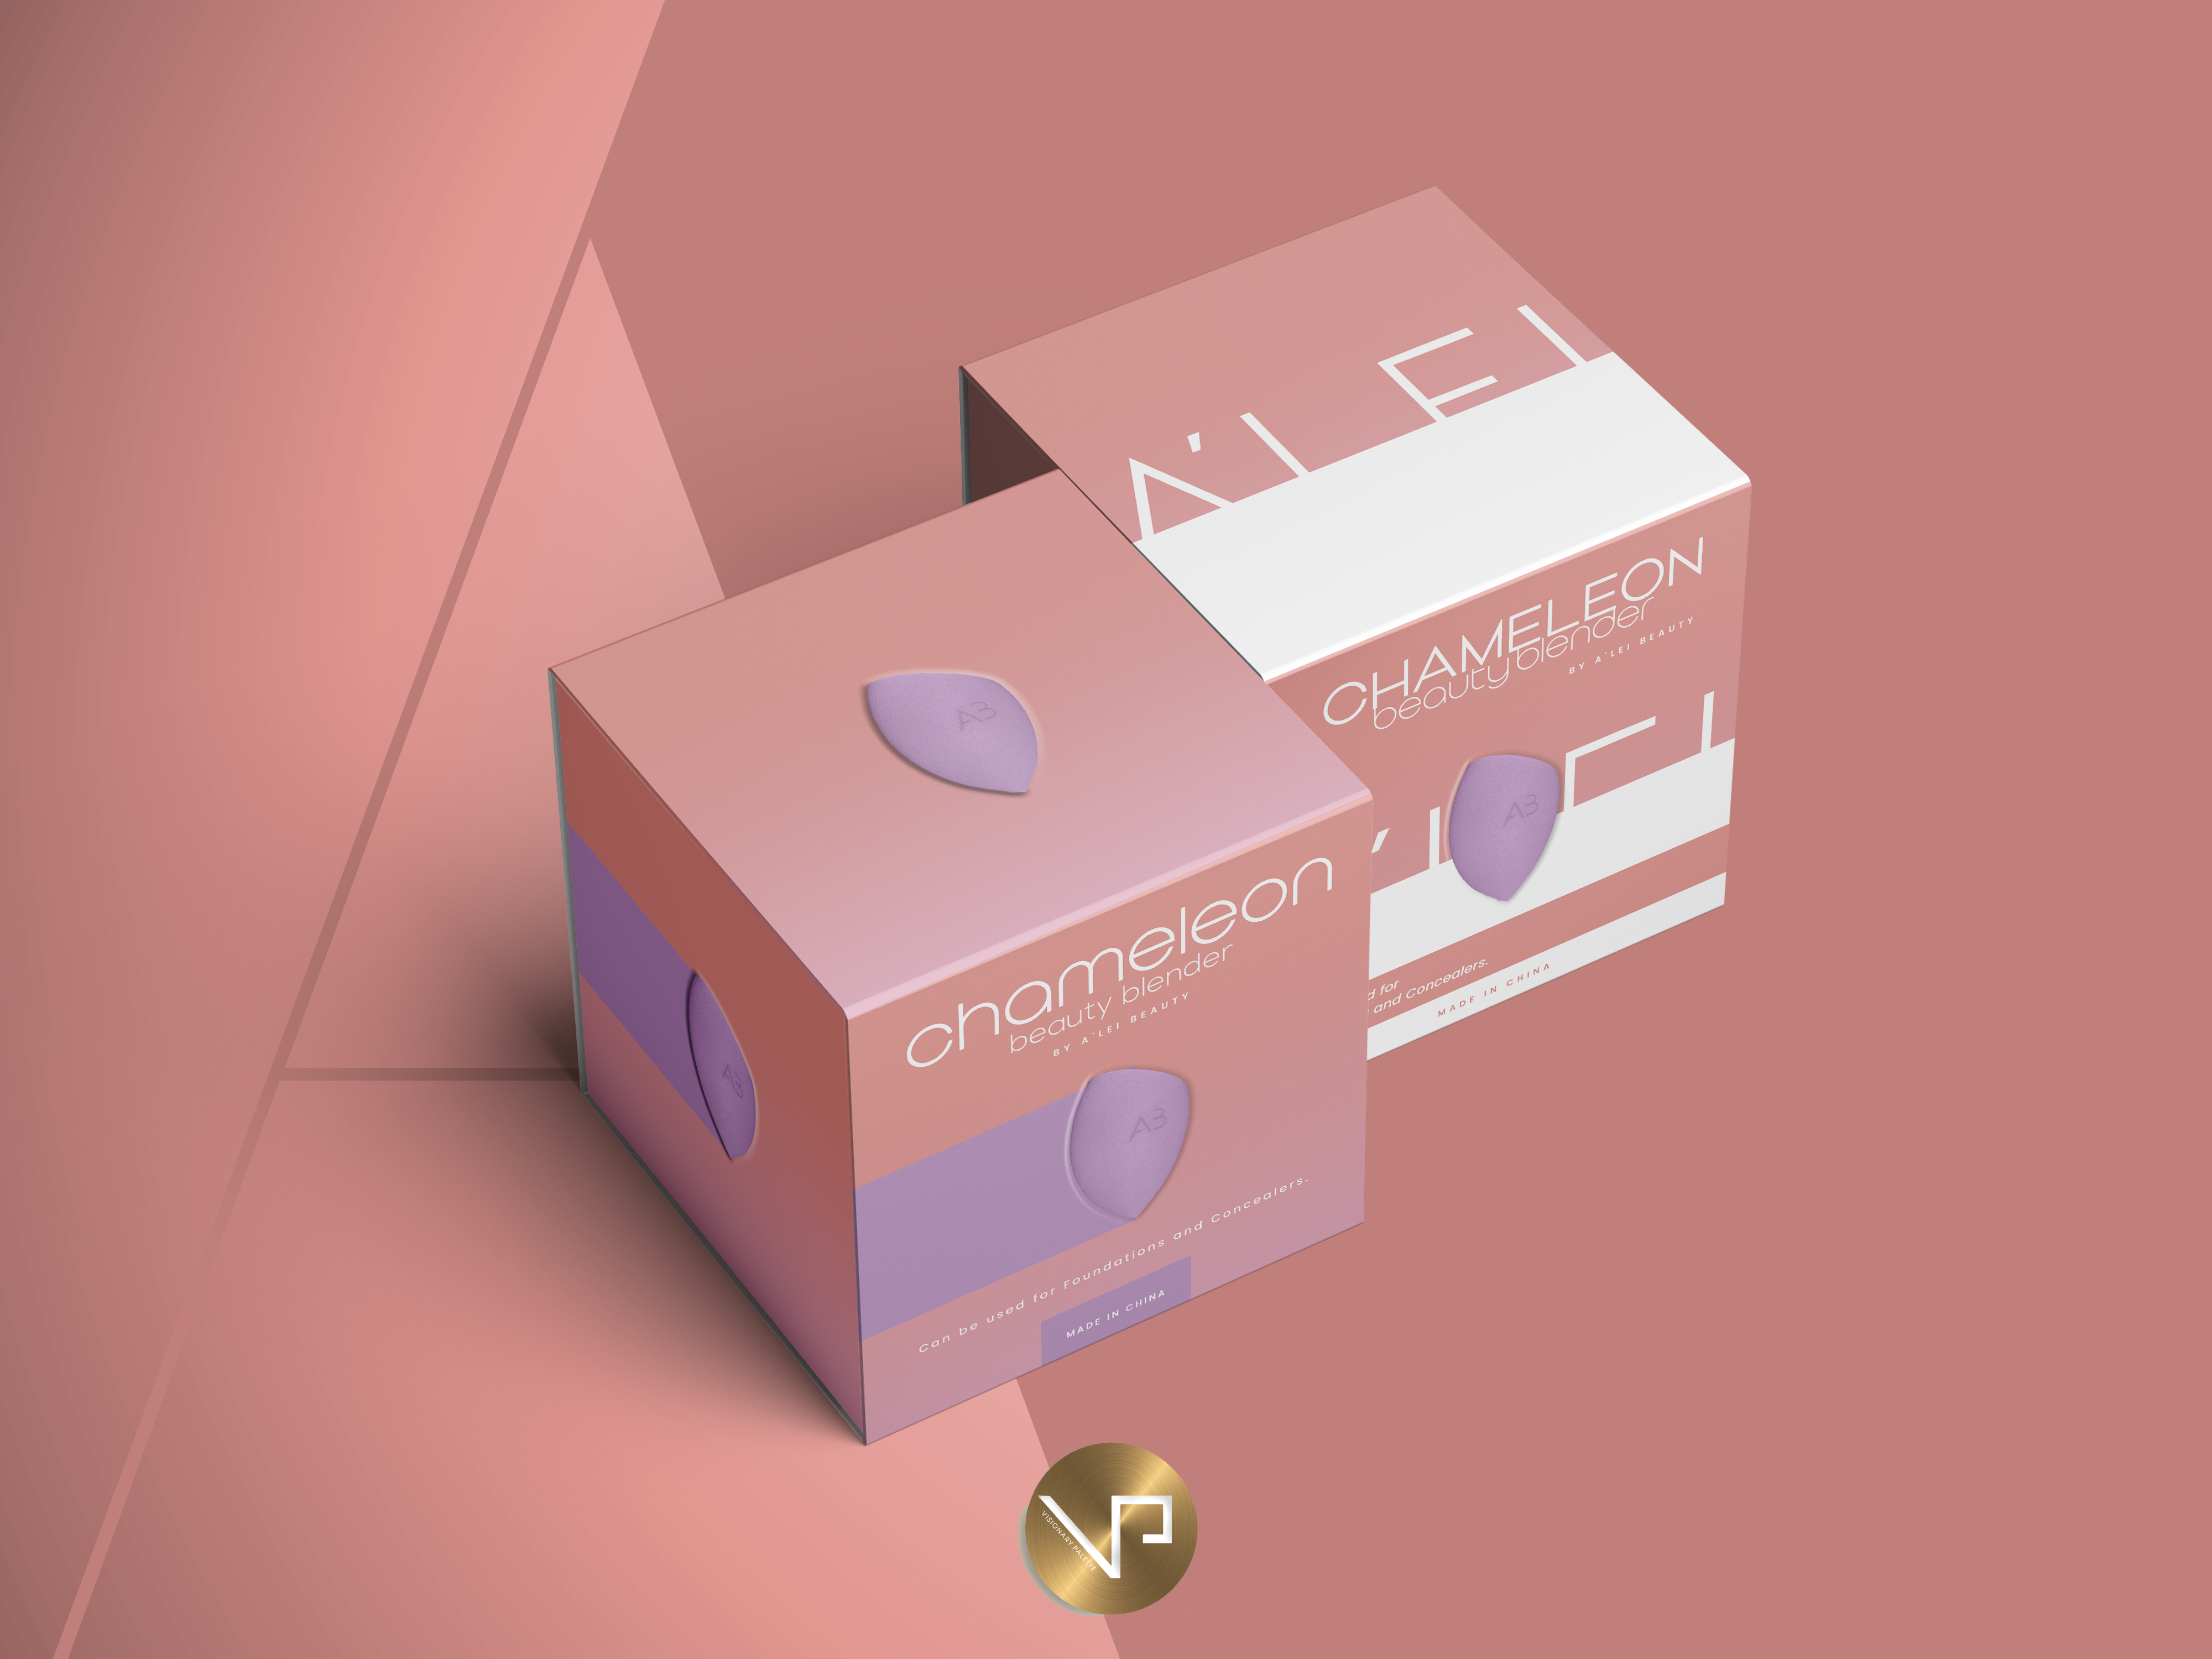 Box/Packaging Design